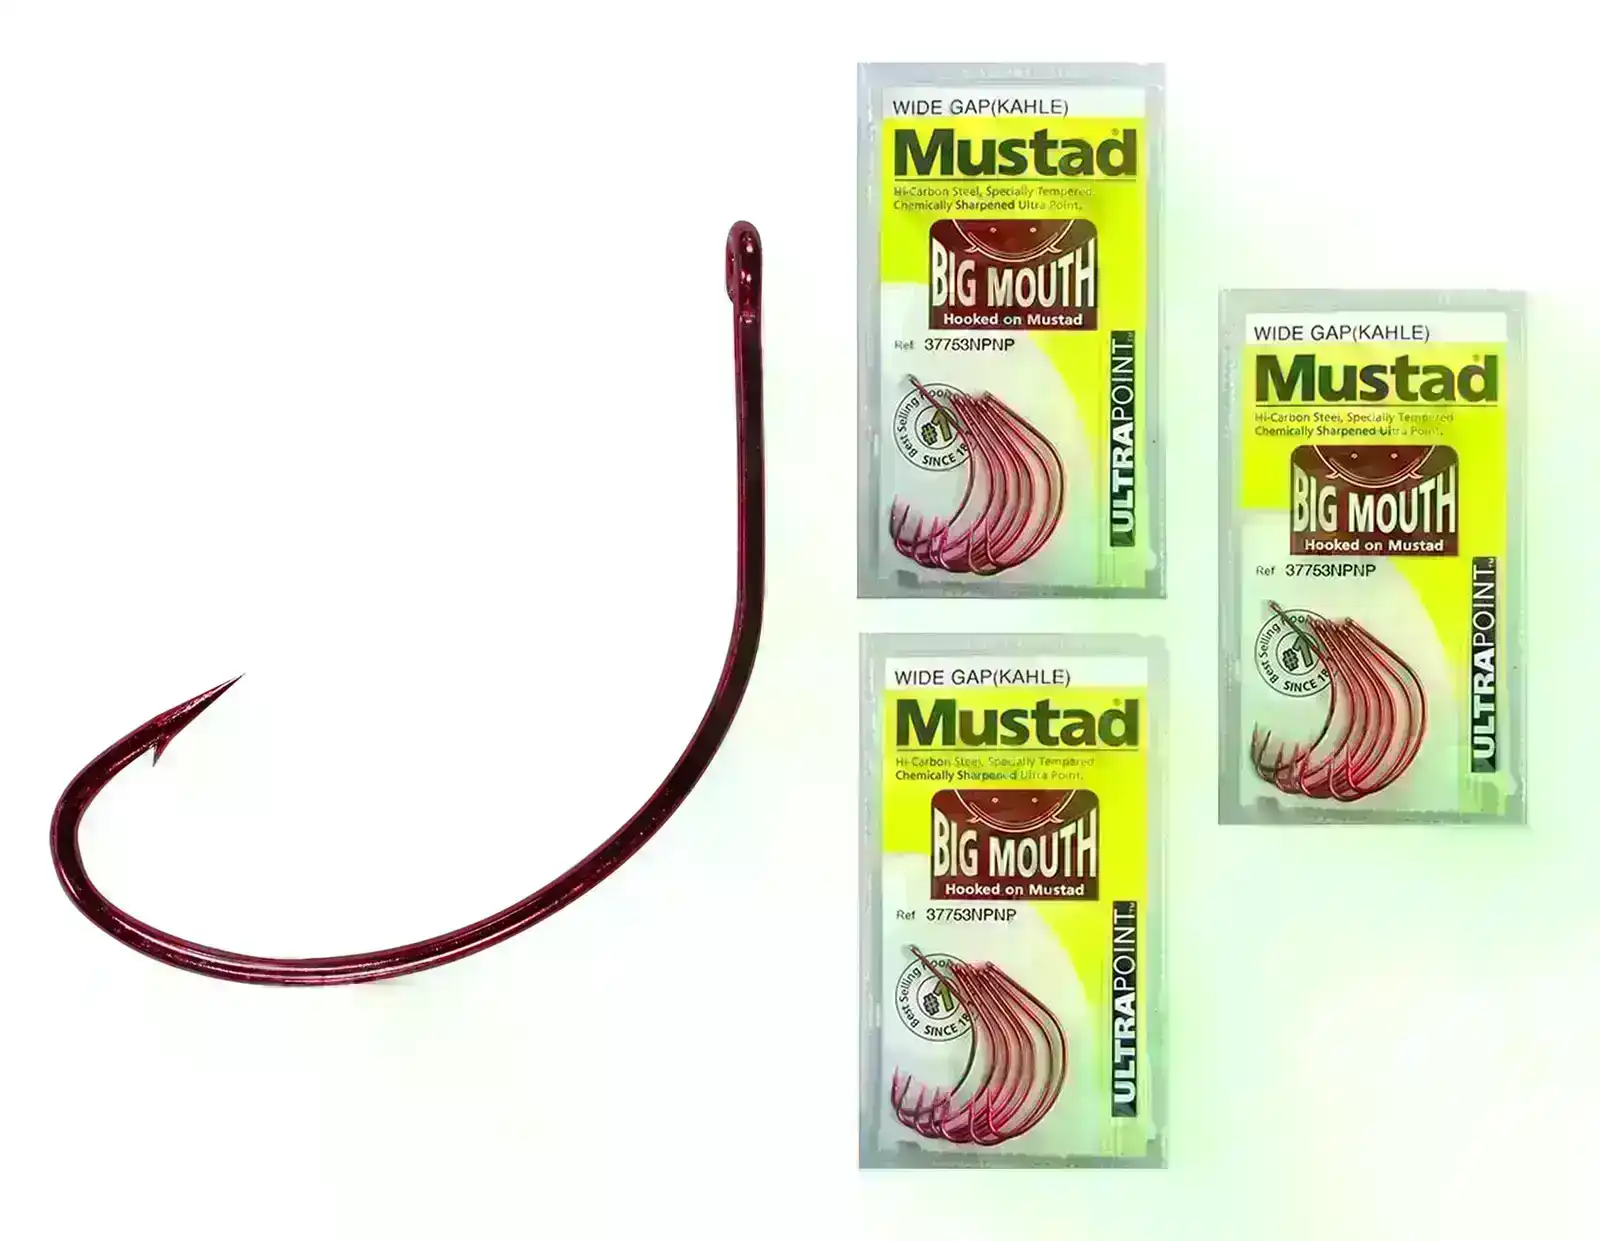 3 Packs of Mustad 37753NPNP Big Mouth Chemically Sharp Fishing